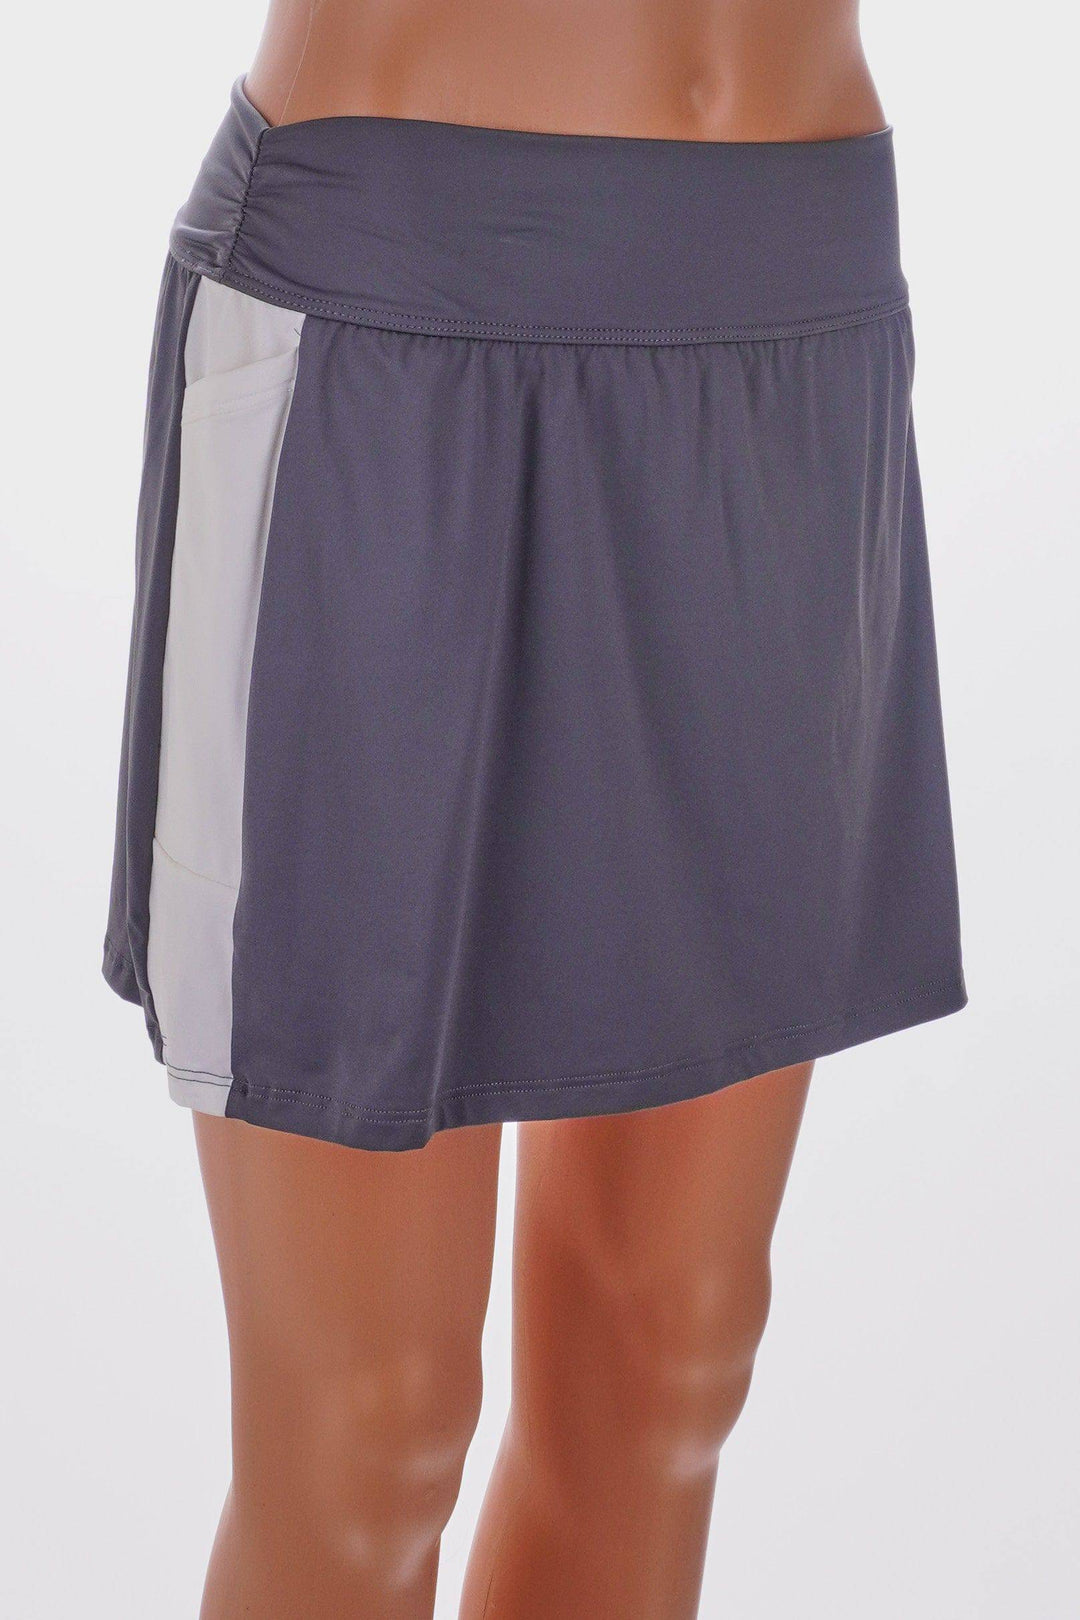 Yaffa Grey / X-Small / Consigned Yaffa Gray and White Tennis Skirt Size L